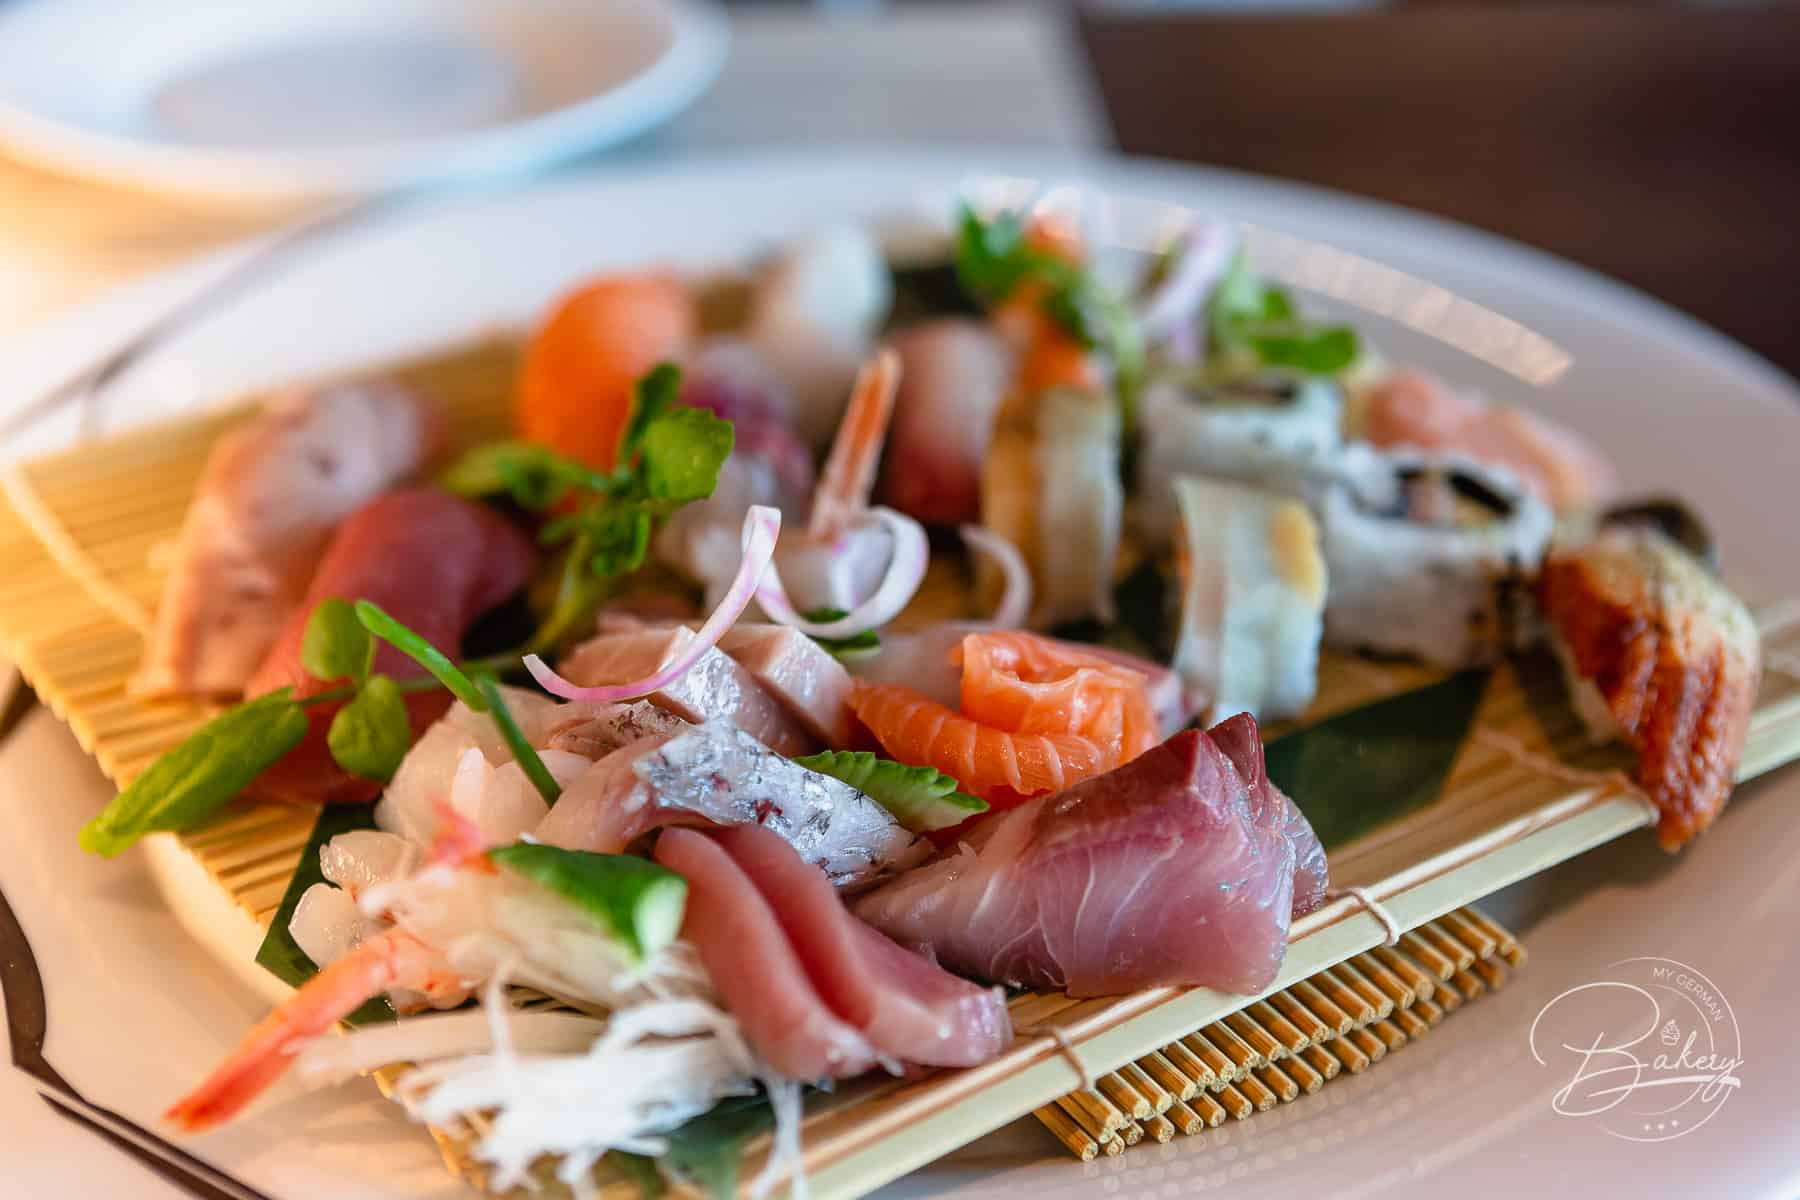 Yunico Sushi - Restaurant Bonn - Sushi essen mit Rheinblick